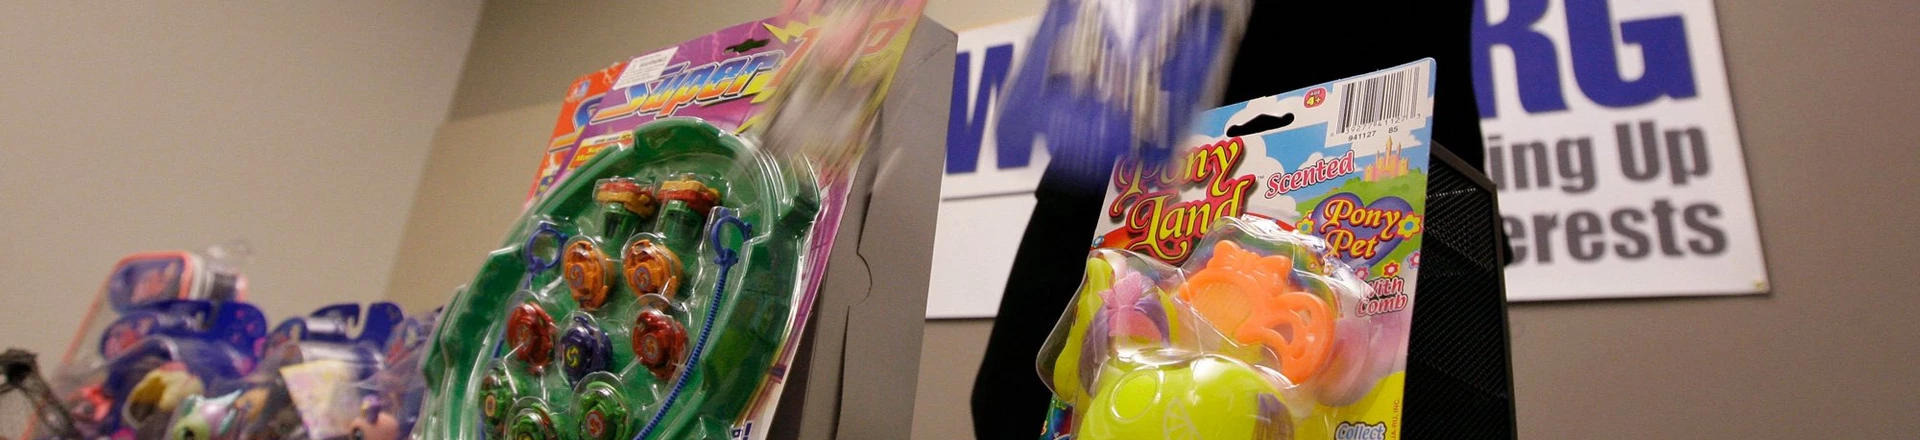 Durante entrevista coletiva, um ativista de defesa do consumidor exibe brinquedos que contêm grandes quantidades de chumbo e ftalatos tóxicos – Seattle, Washington, 25 de novembro de 2008.